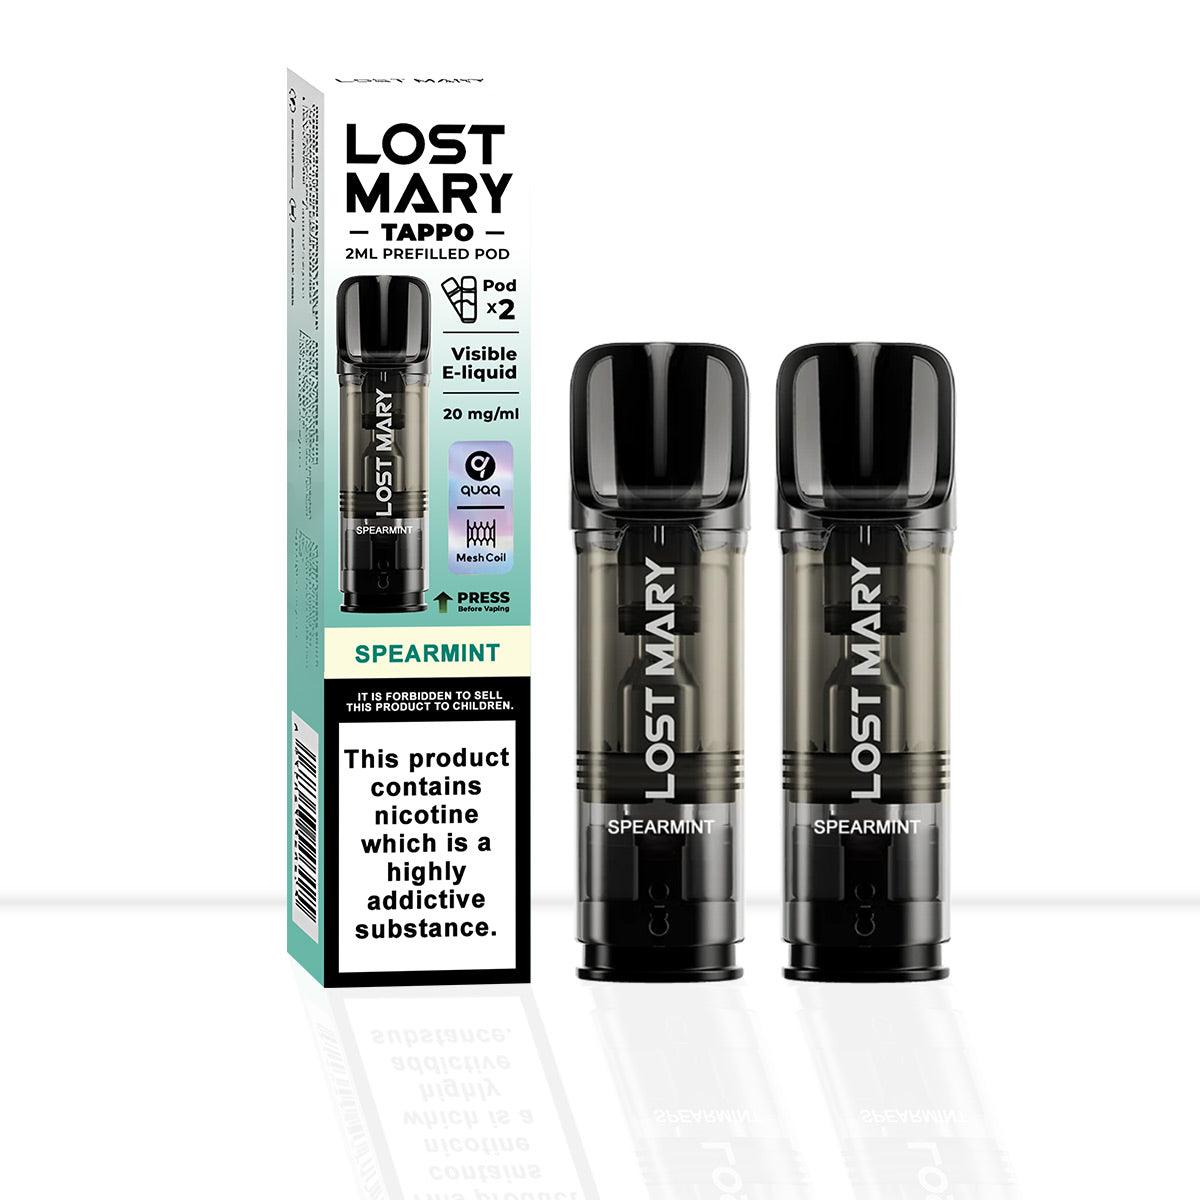 Lost Mary Tappo Spearmint Vape Pods - Pod & Refills